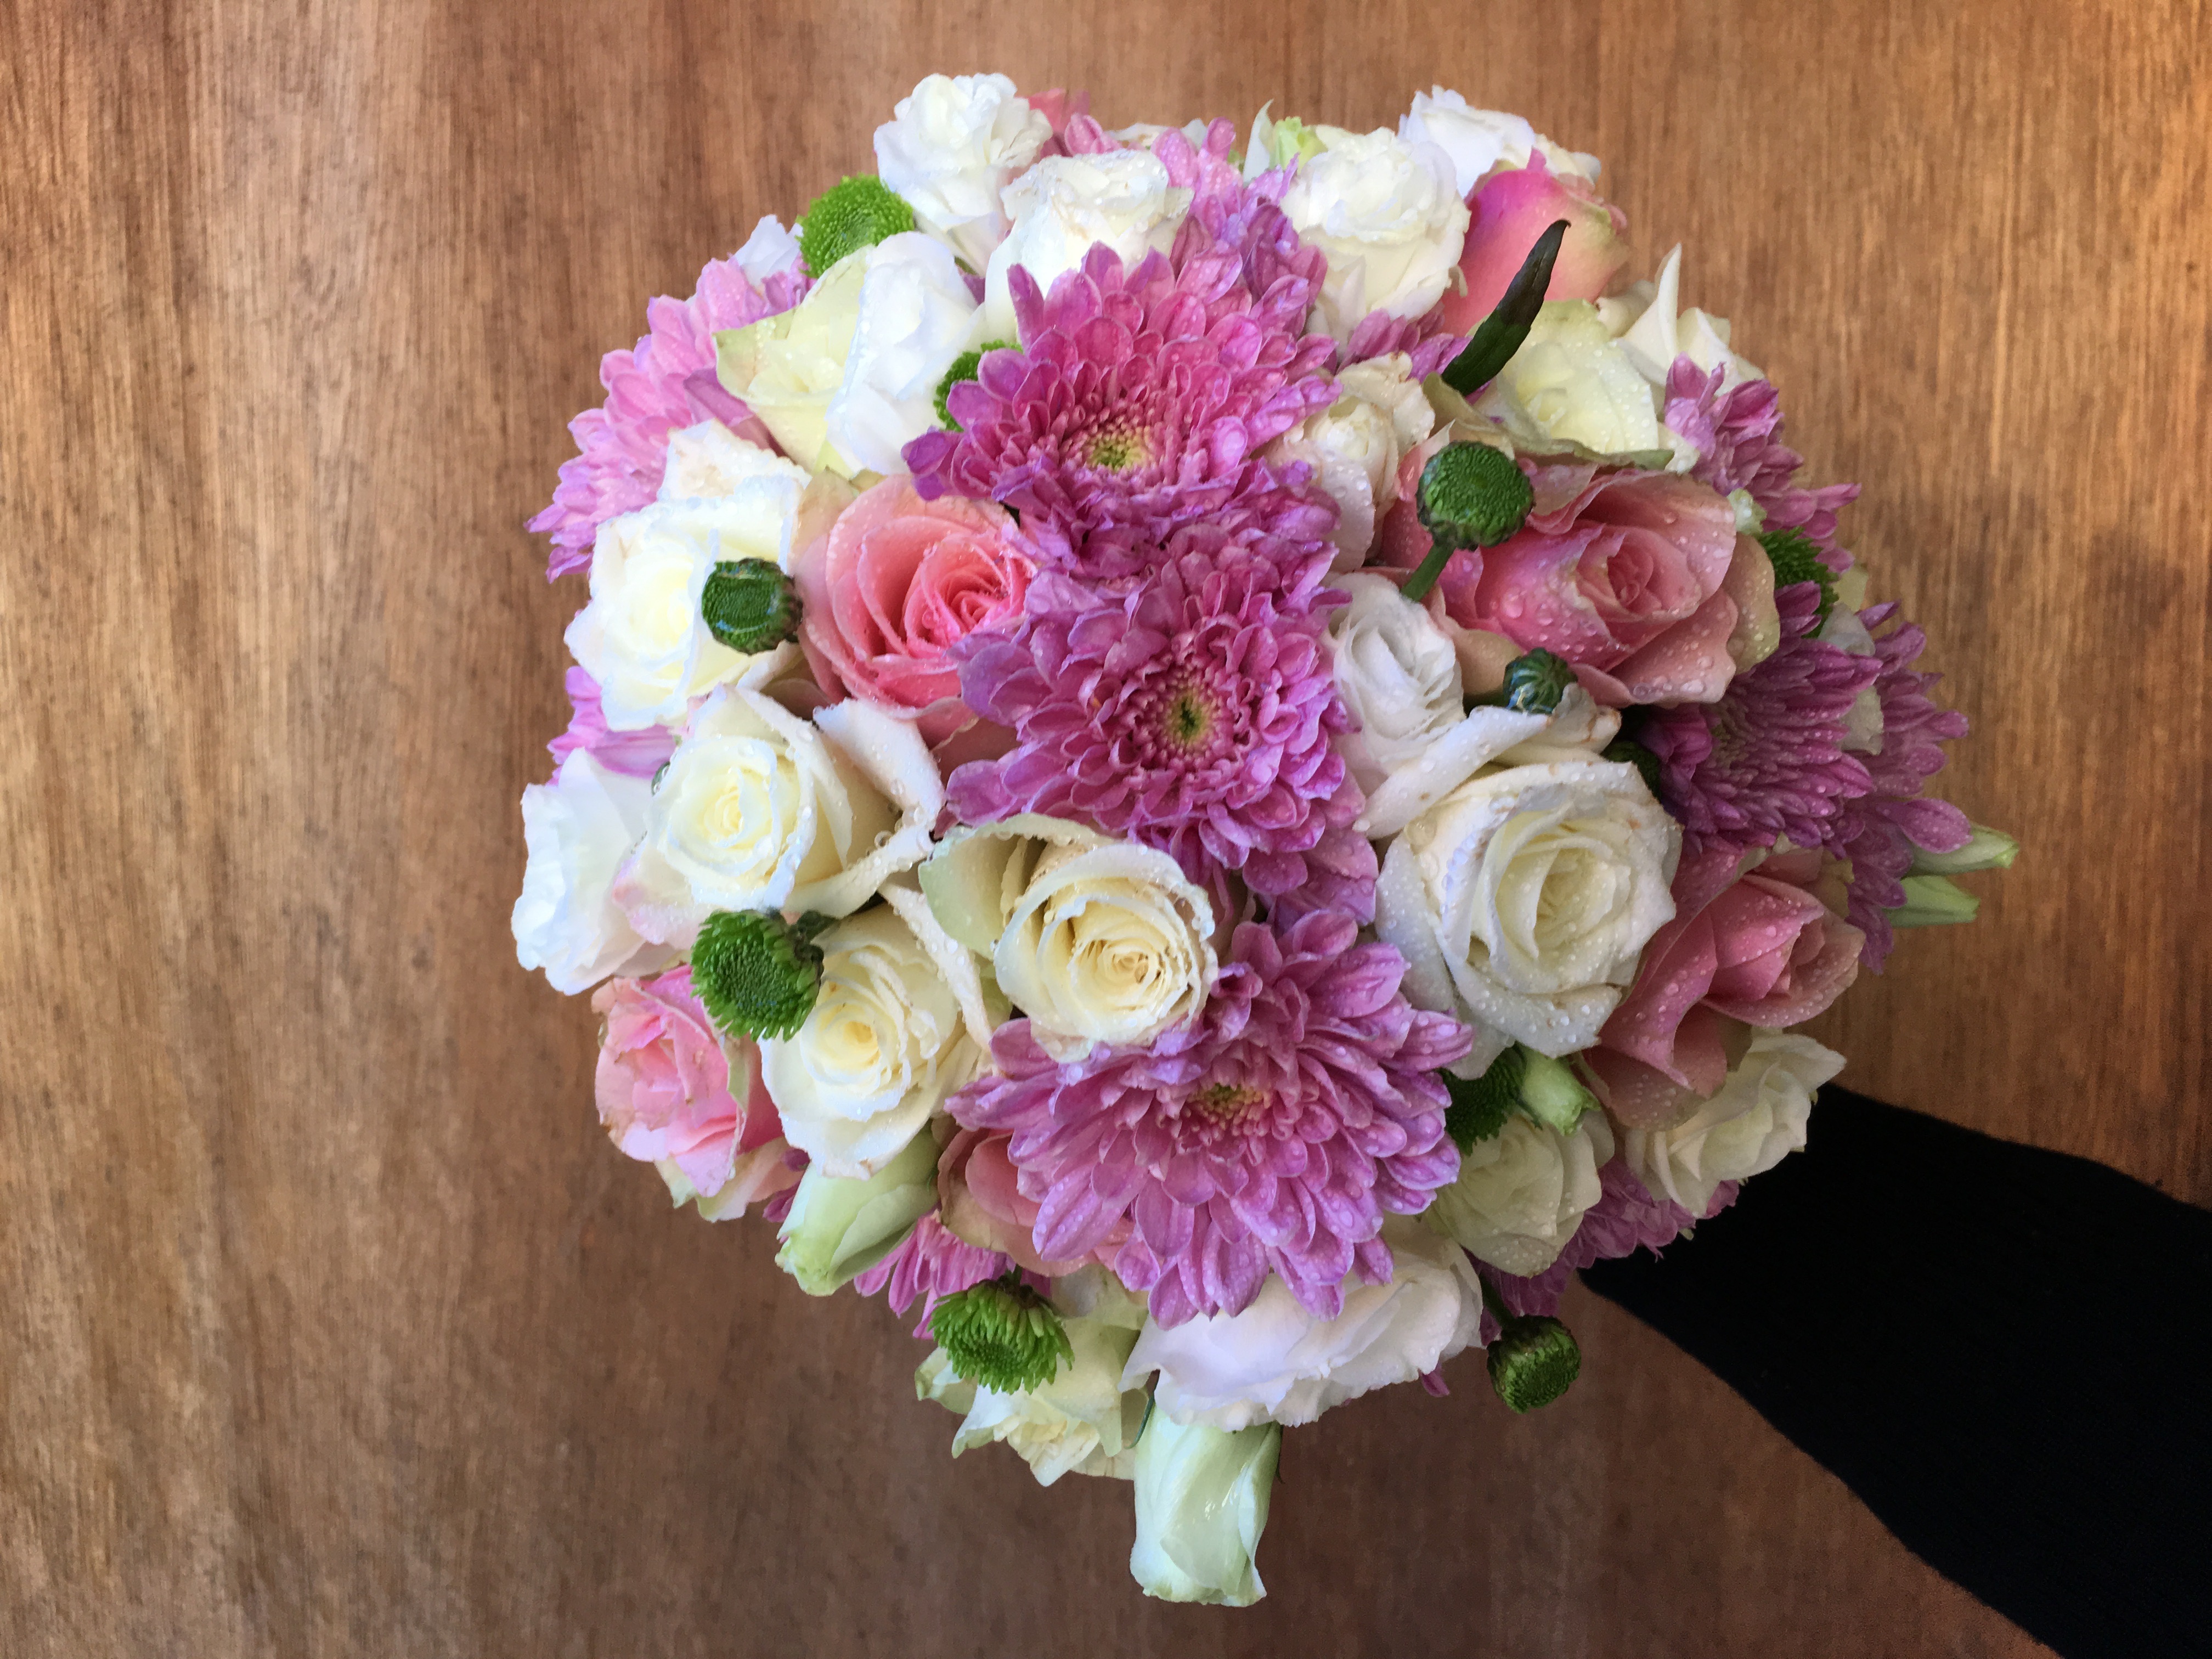 Graceful Blooms wedding bouquet